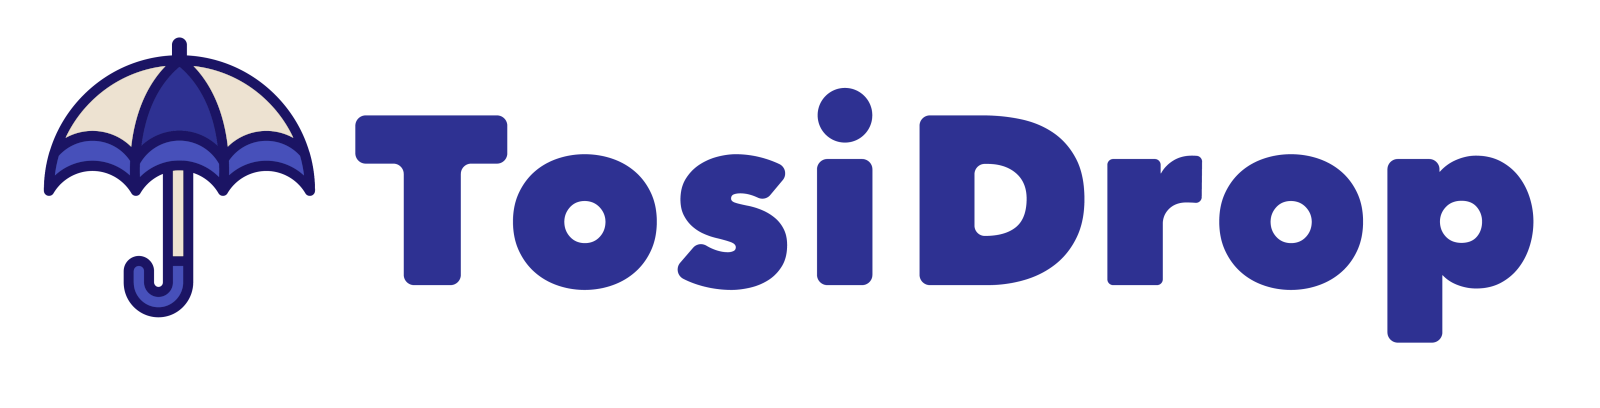 tosidrop_logo